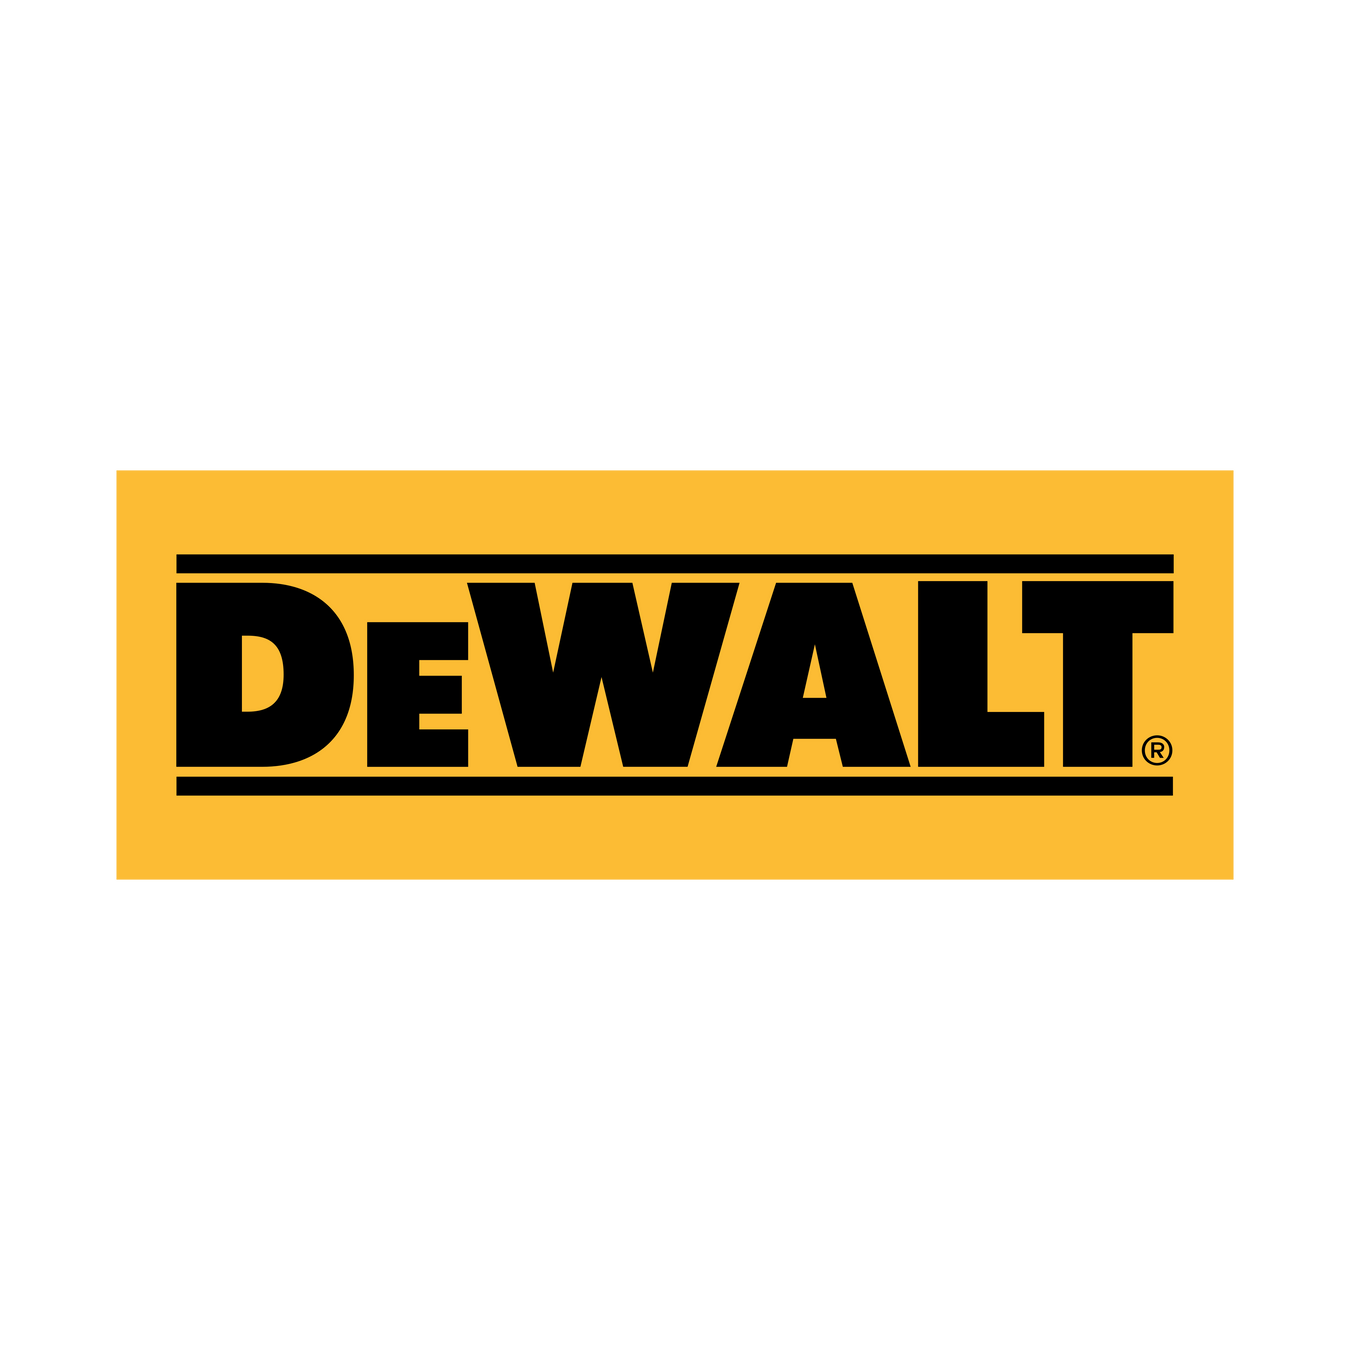 DeWalt®